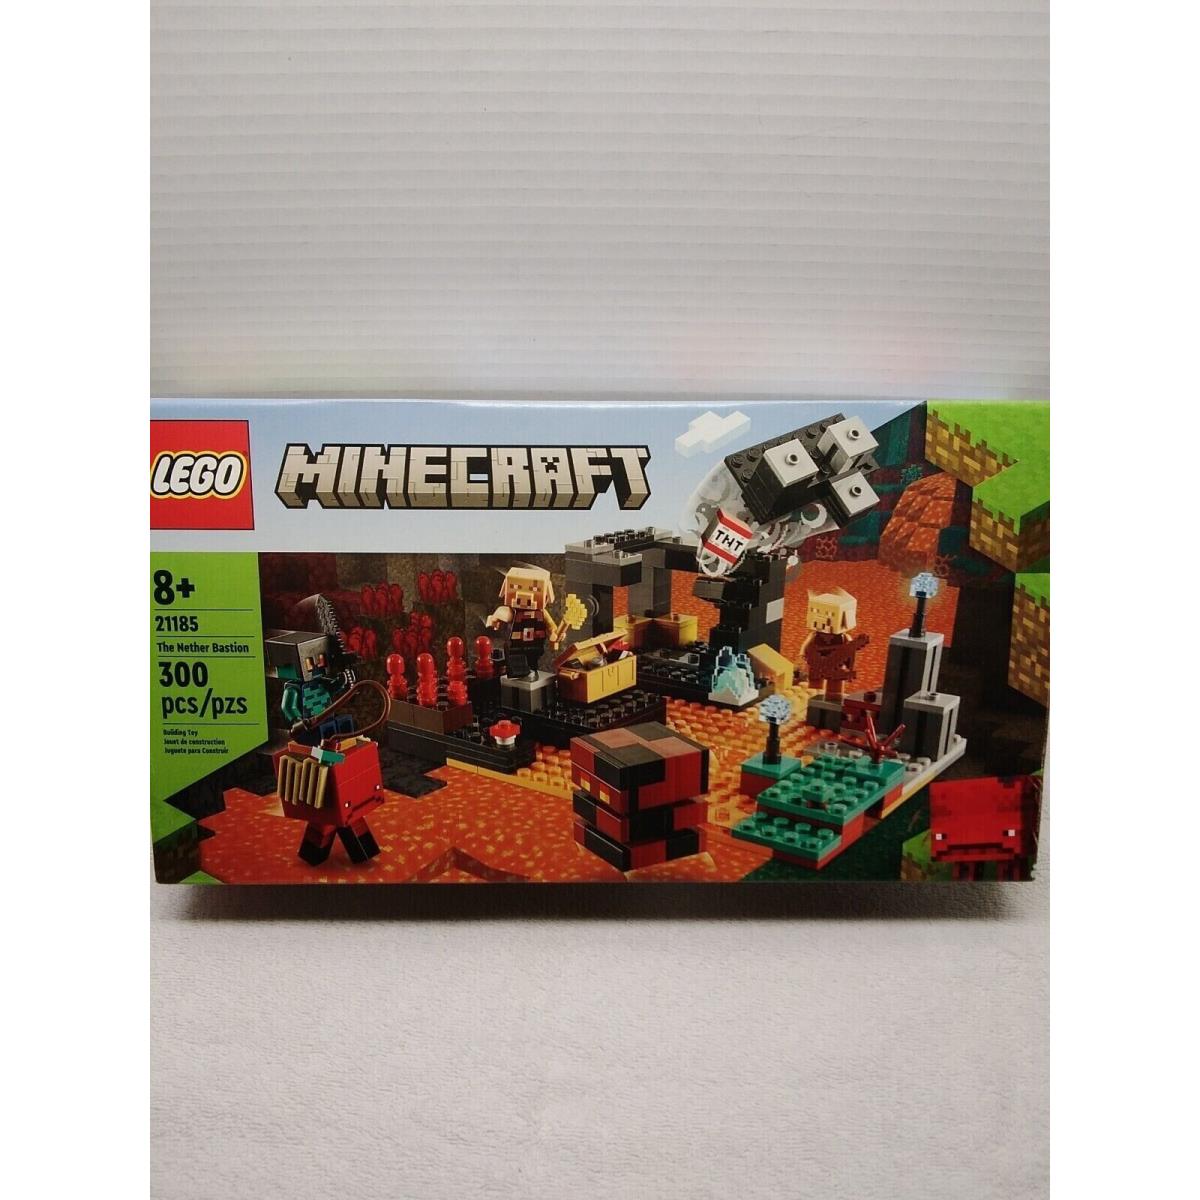 Lego Minecraft: The Nether Bastion 21185